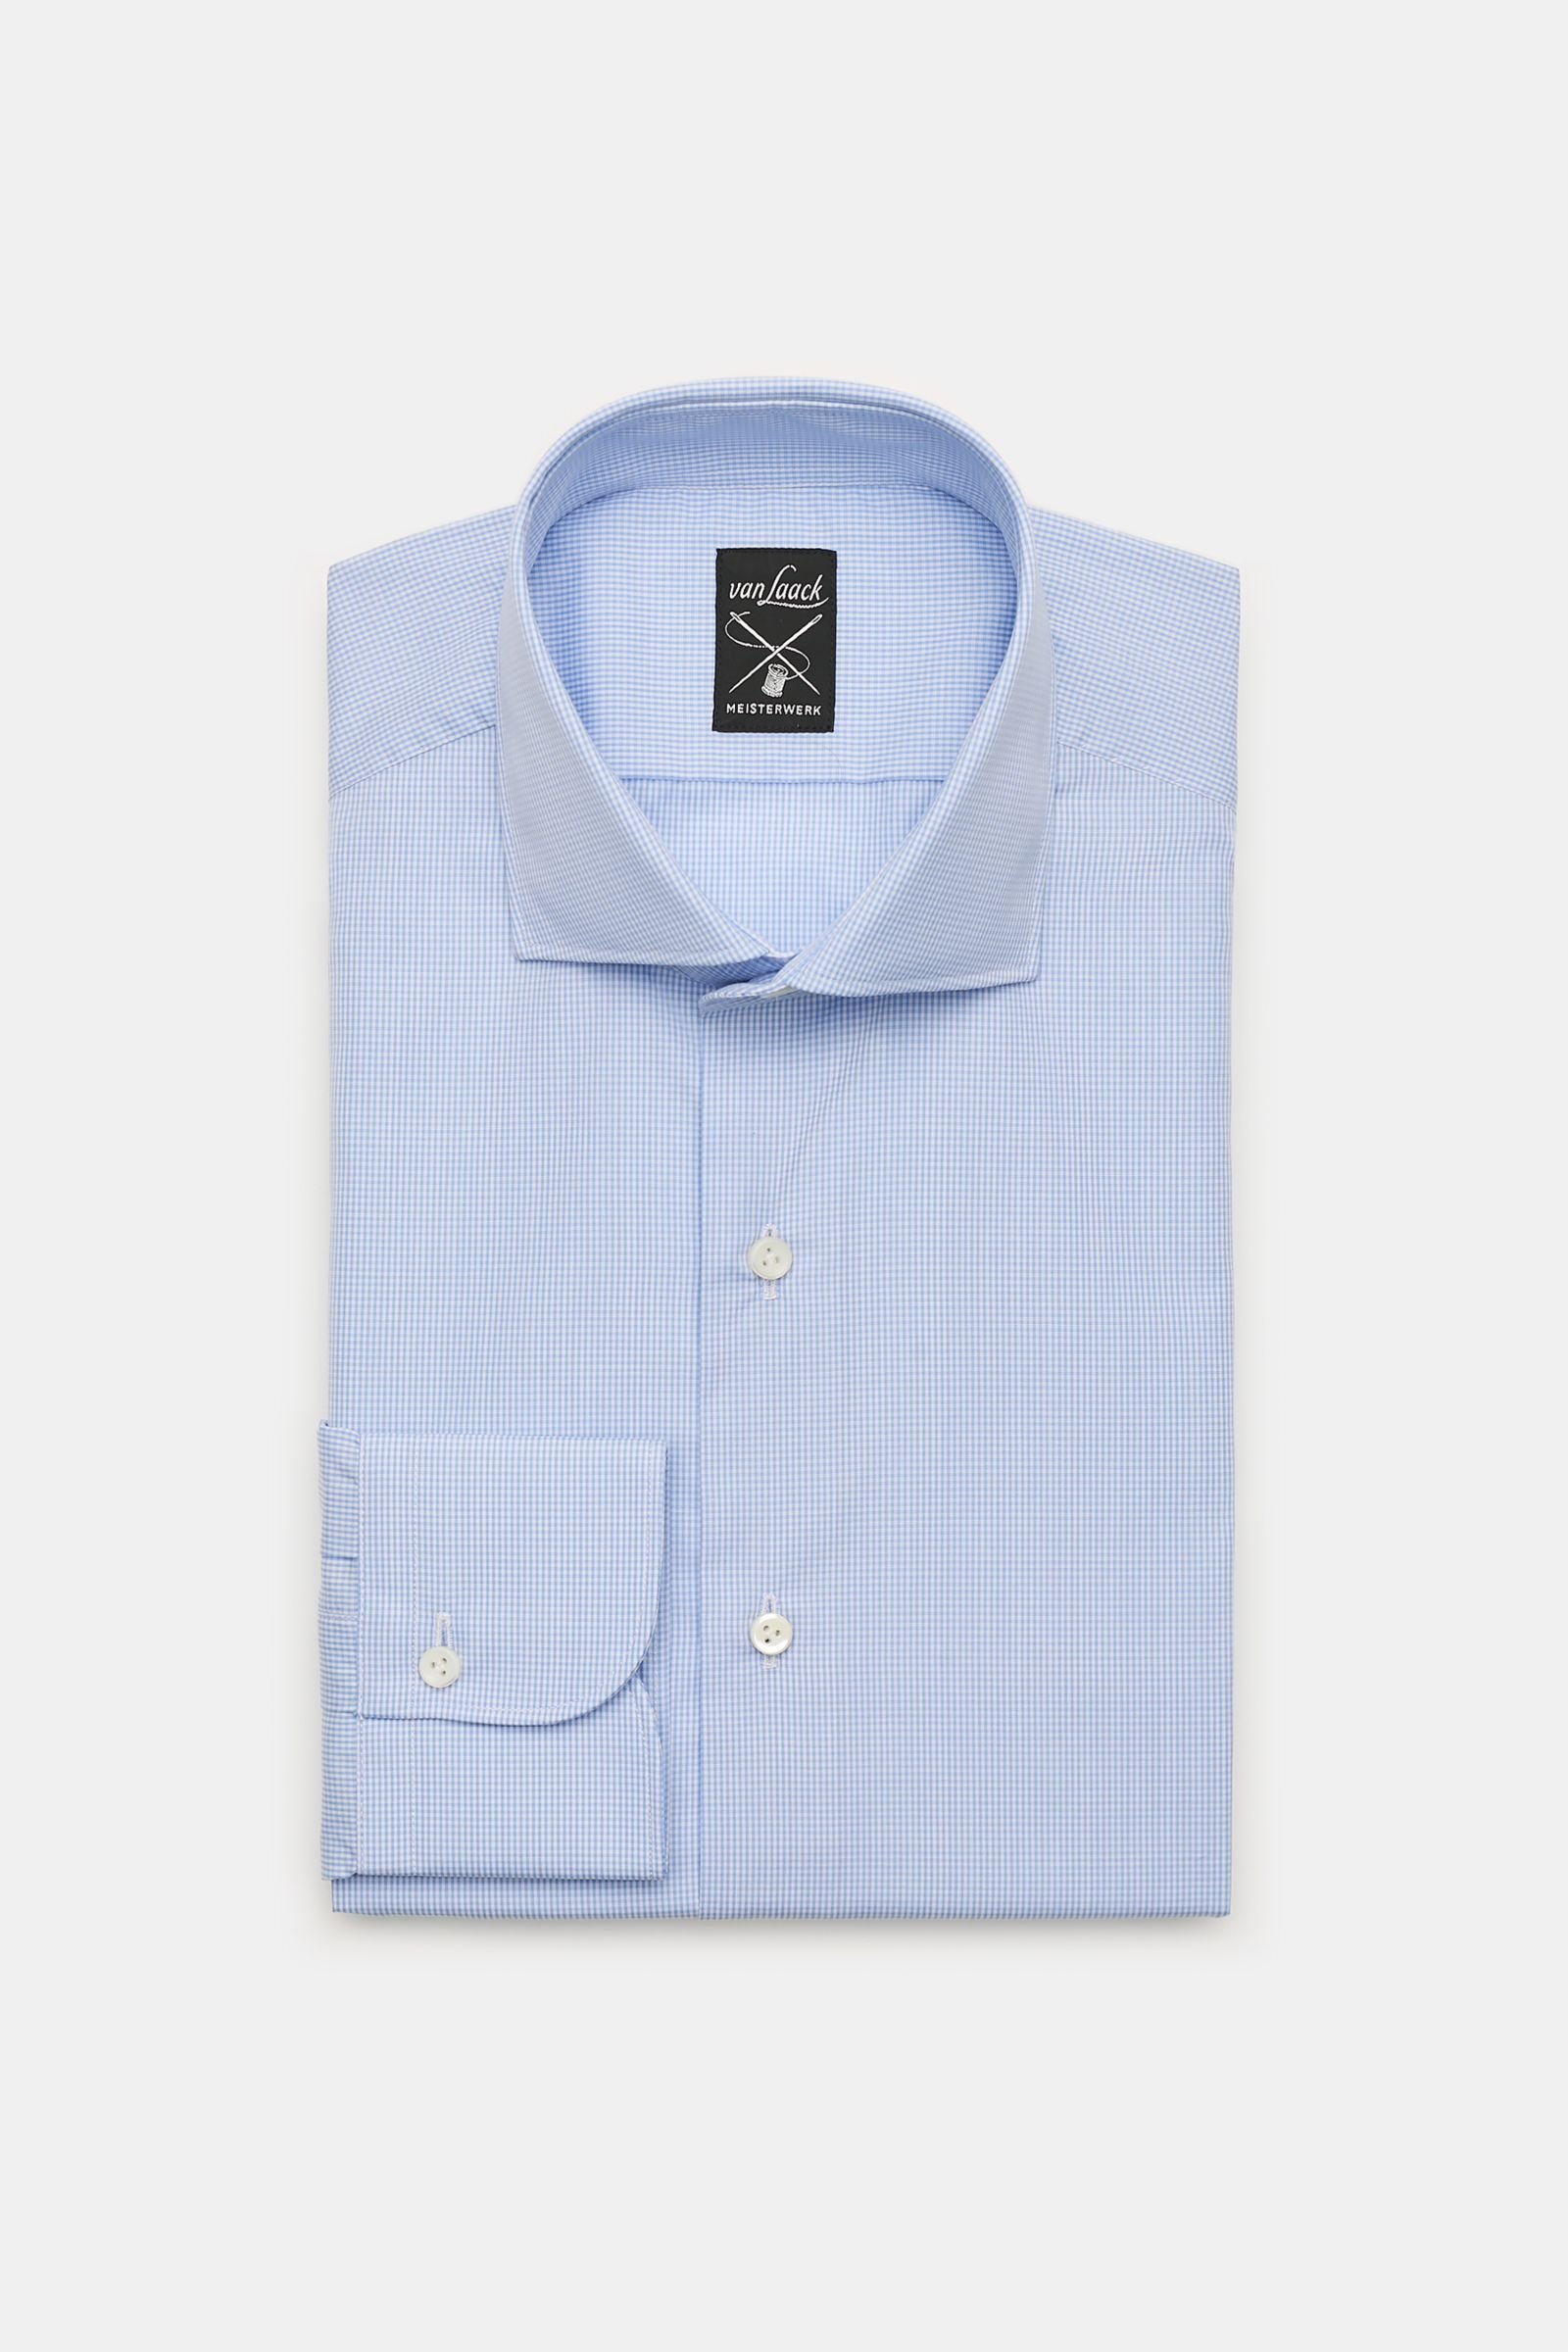 Business shirt 'Mivara Tailor Fit' shark collar light blue/white checked